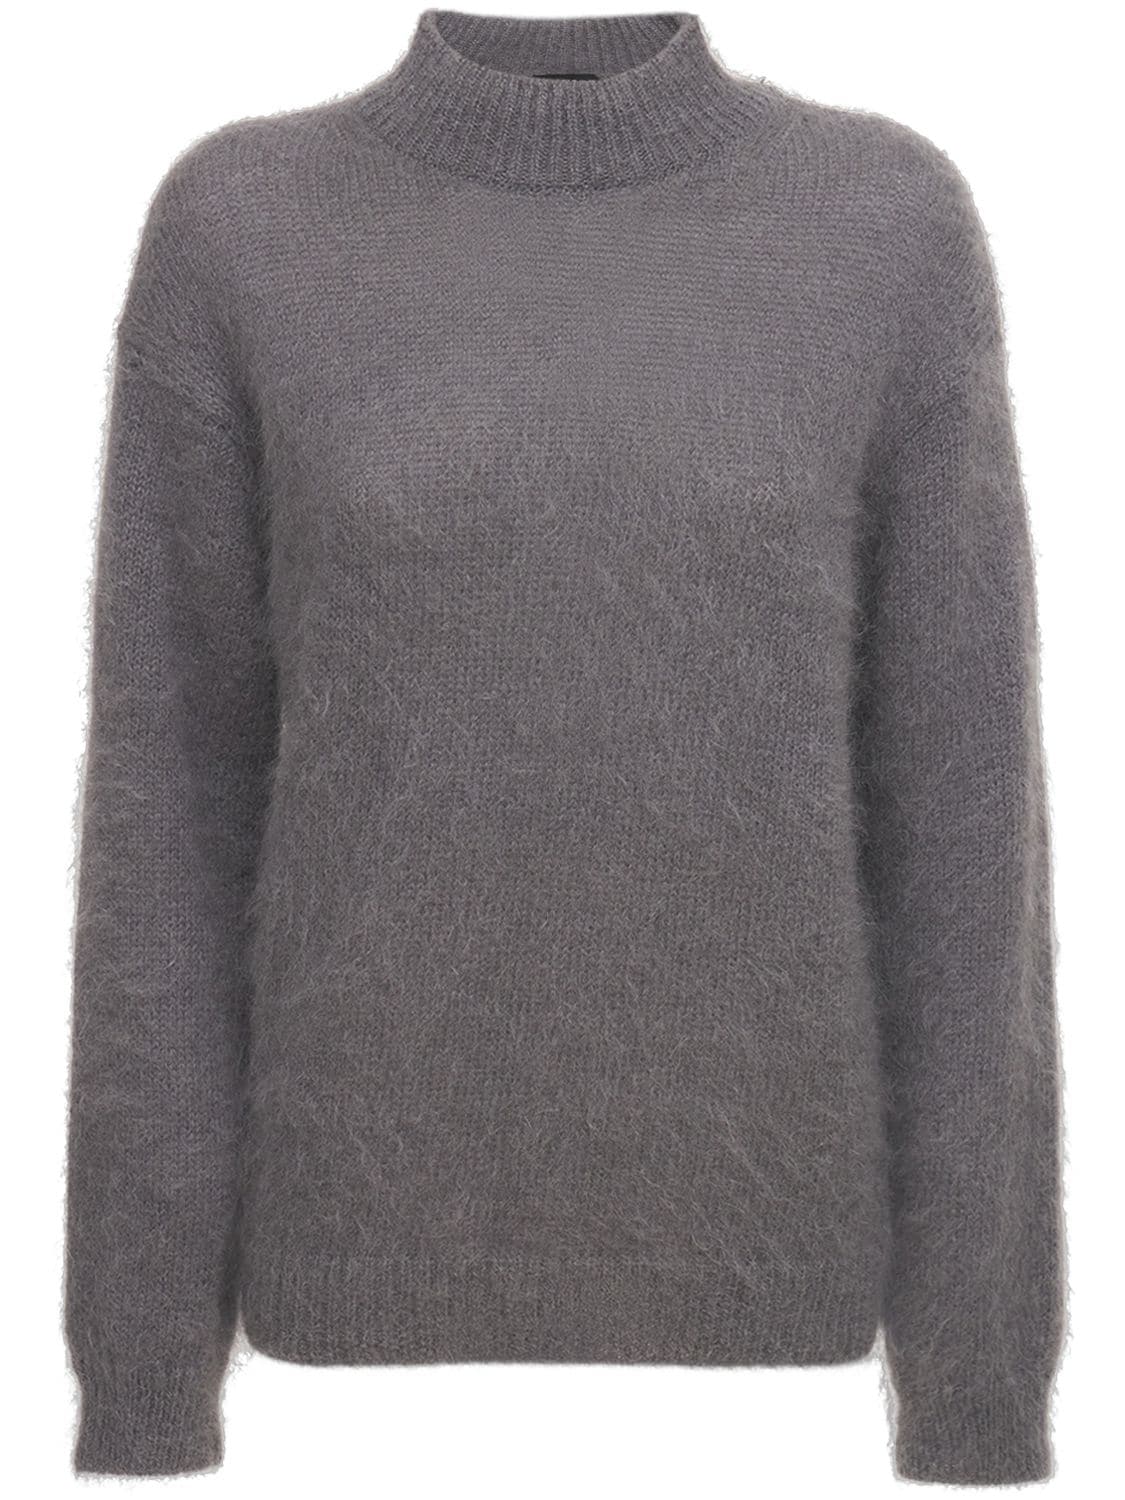 TOM FORD Mohair Blend Knit Turtleneck Sweater for Women